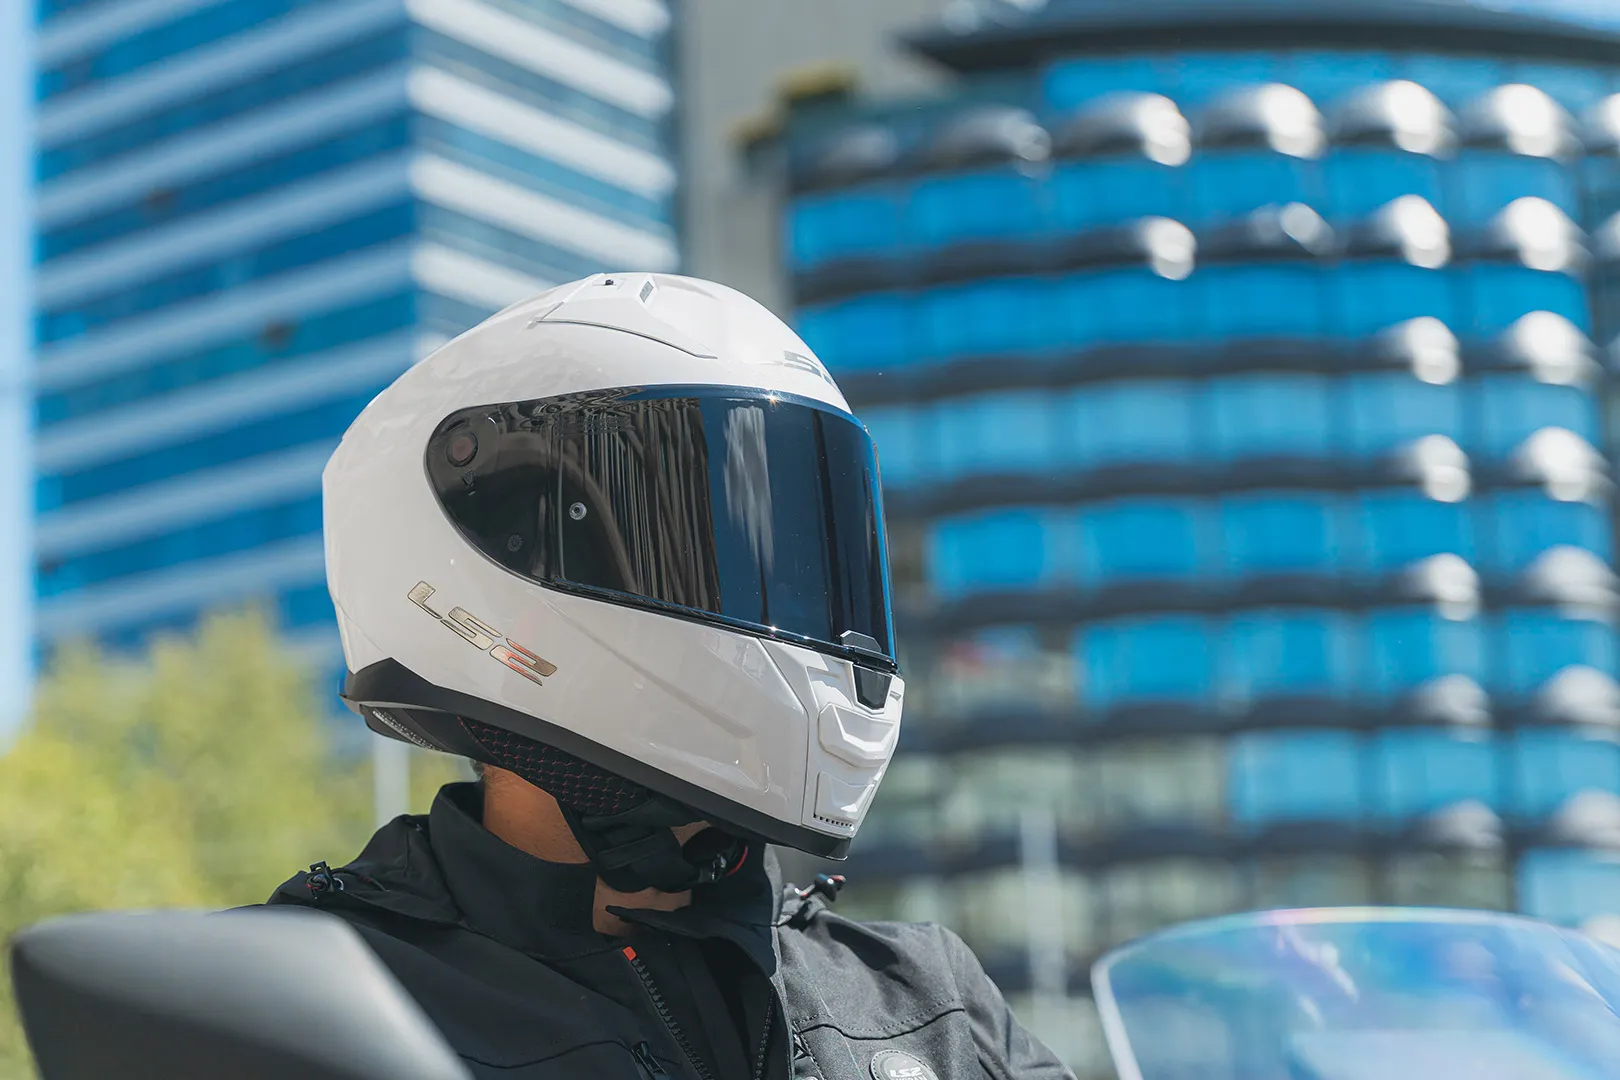 Casco LS2 Vector II Stylus Naranja Negro – Moto Helmets & Sebastian